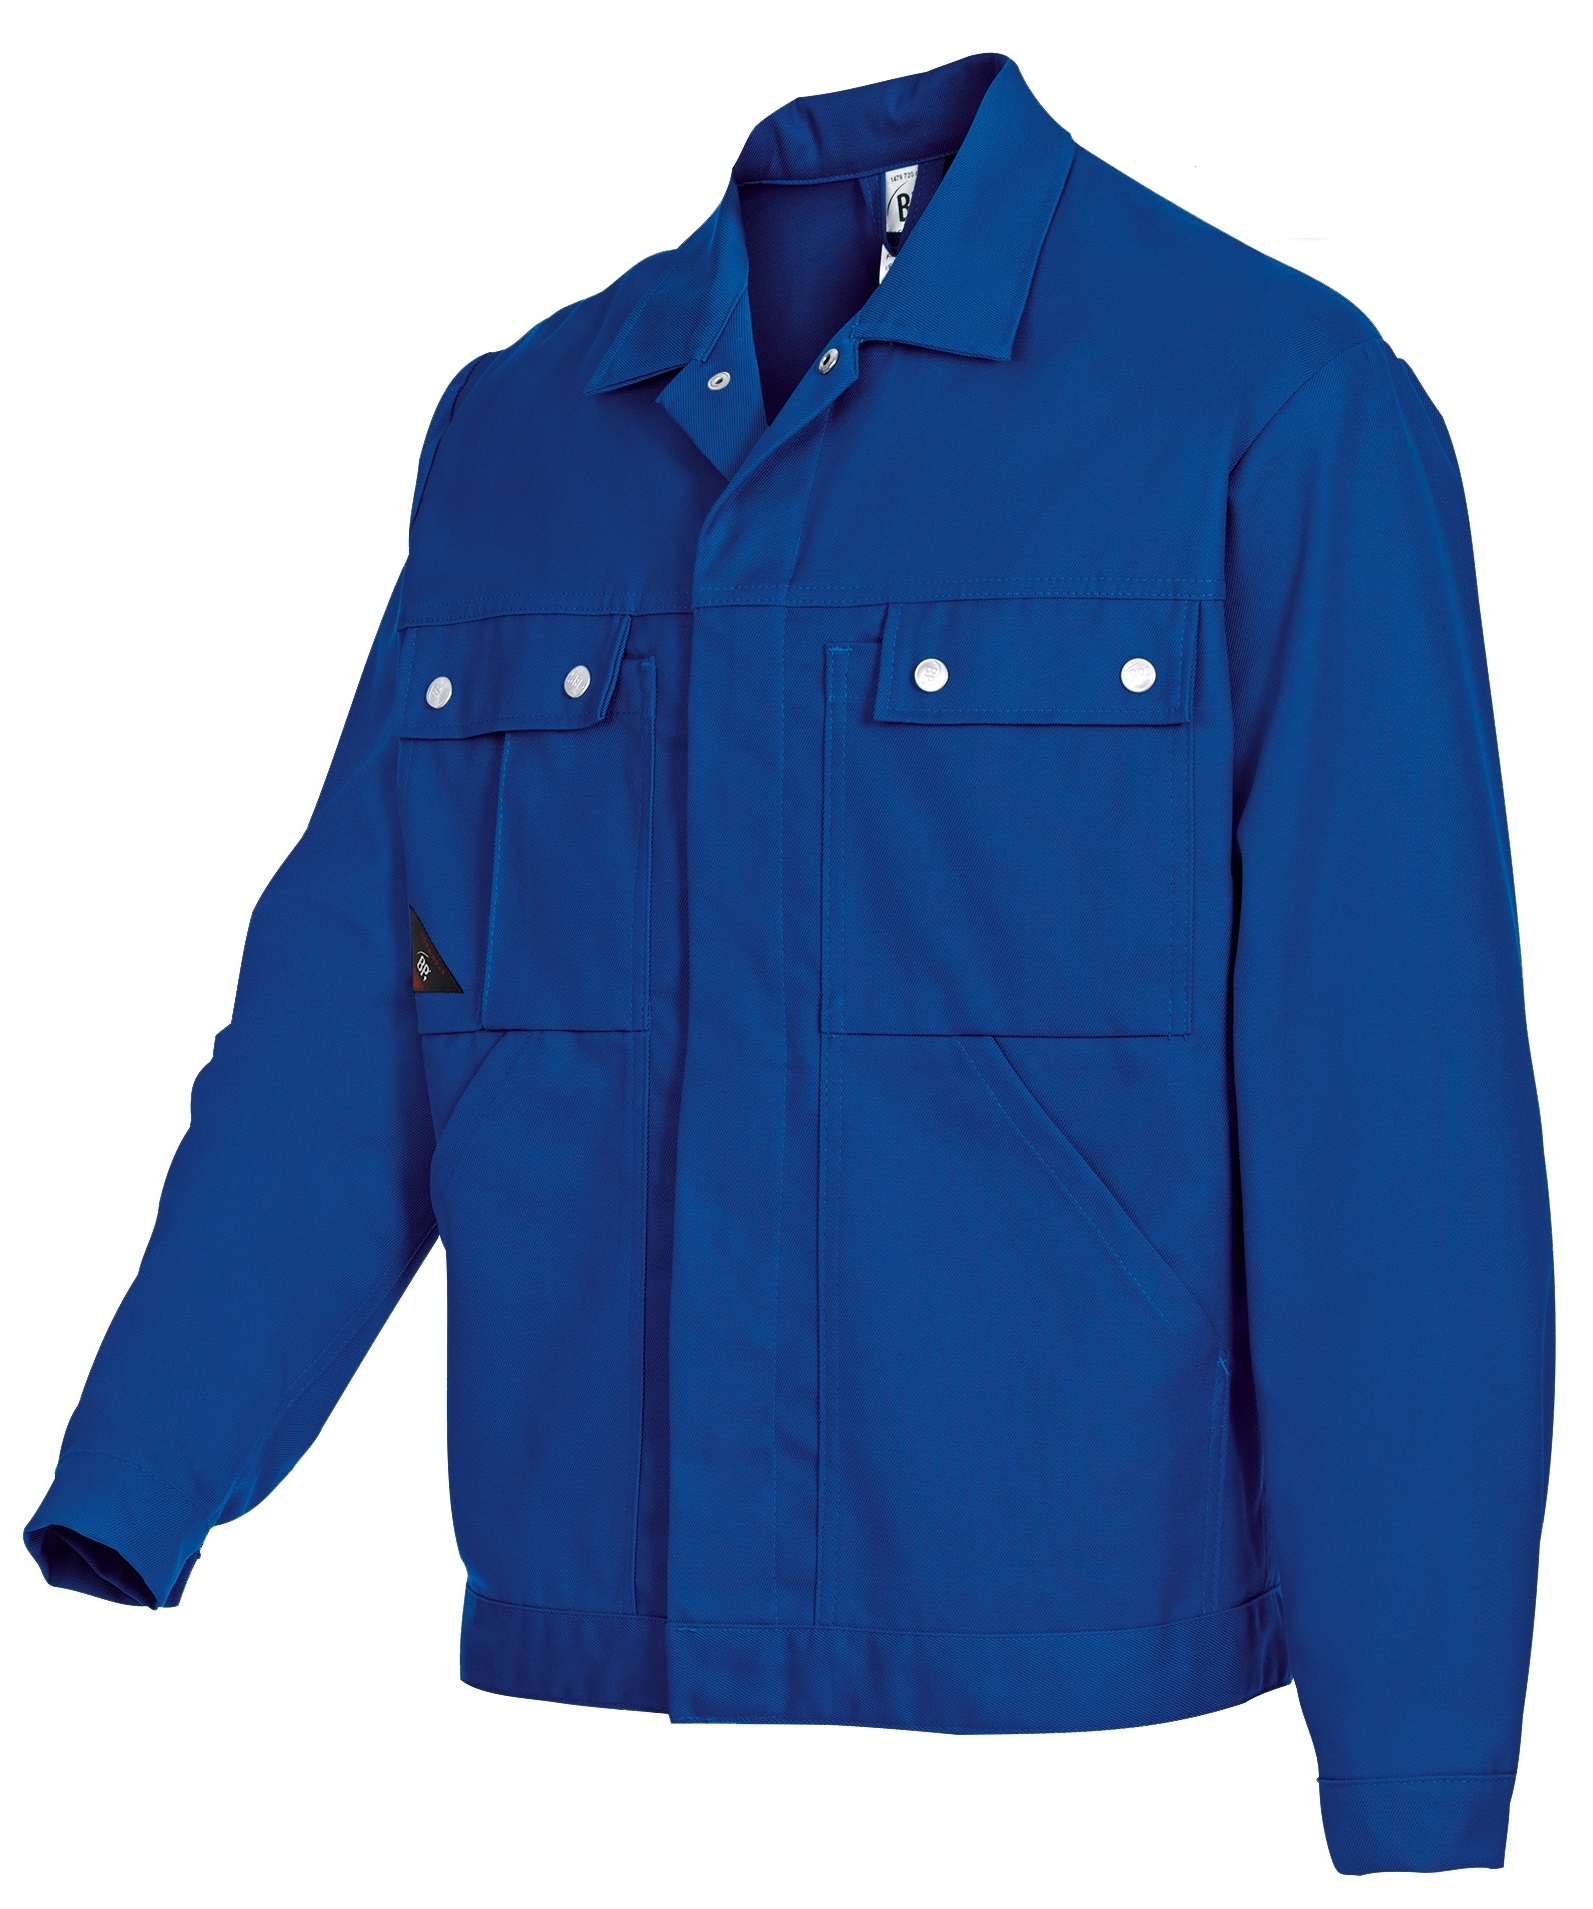 BP Arbeitsjacke Berufsjacke Schutzjacke Arbeitskleidung Berufskleidung königsblau ca 305g